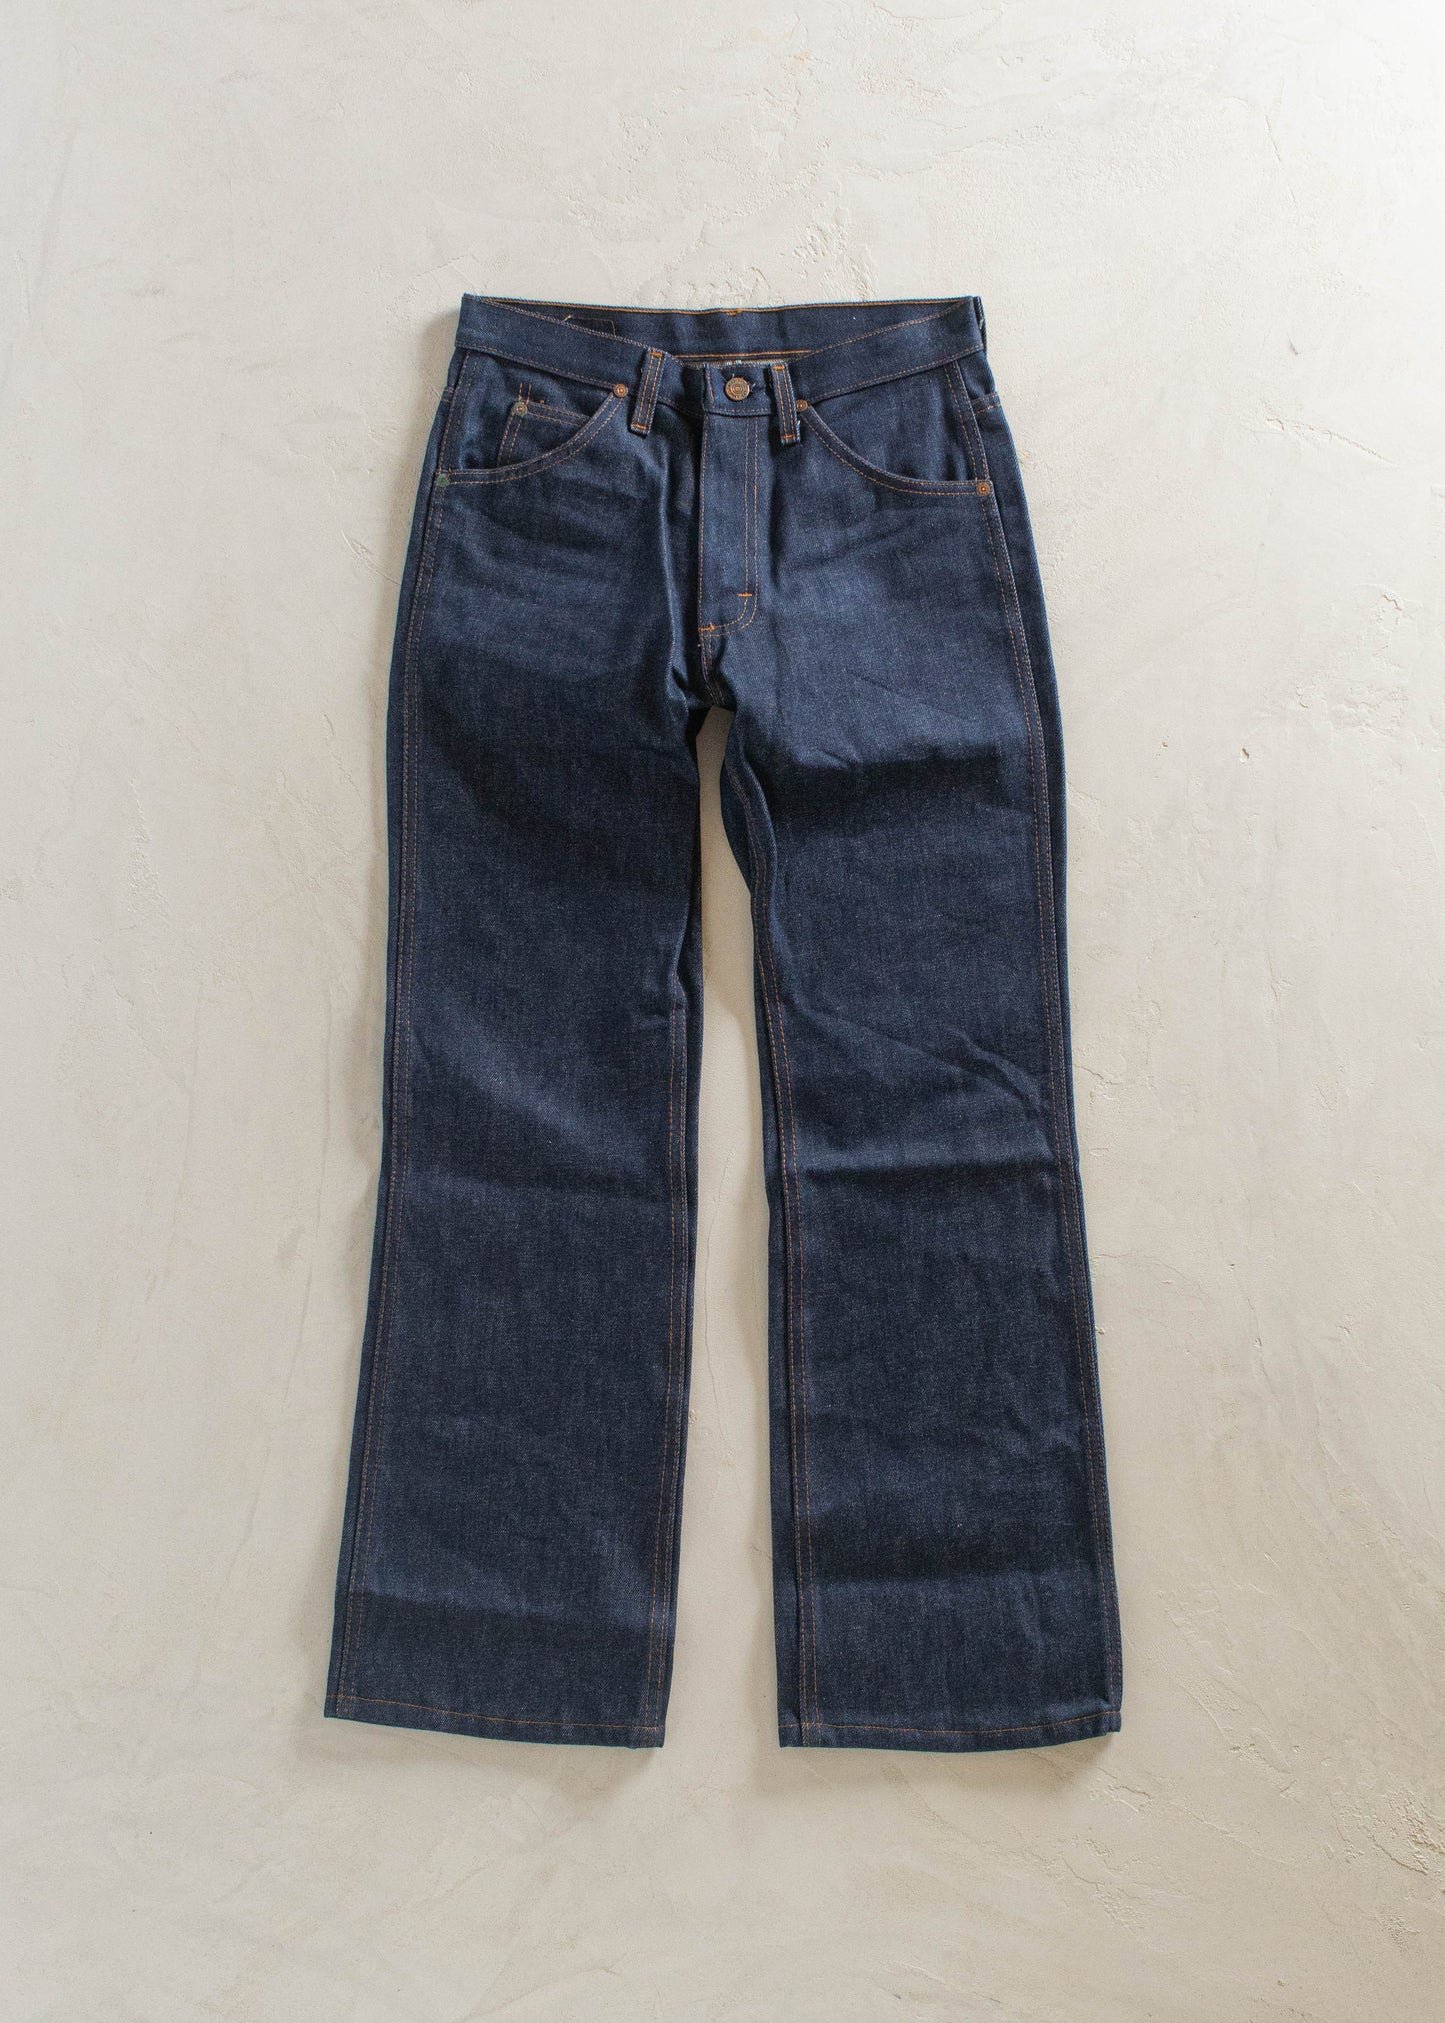 1980s Roebucks Darkwash Jeans Size Women's 27 Men's 30